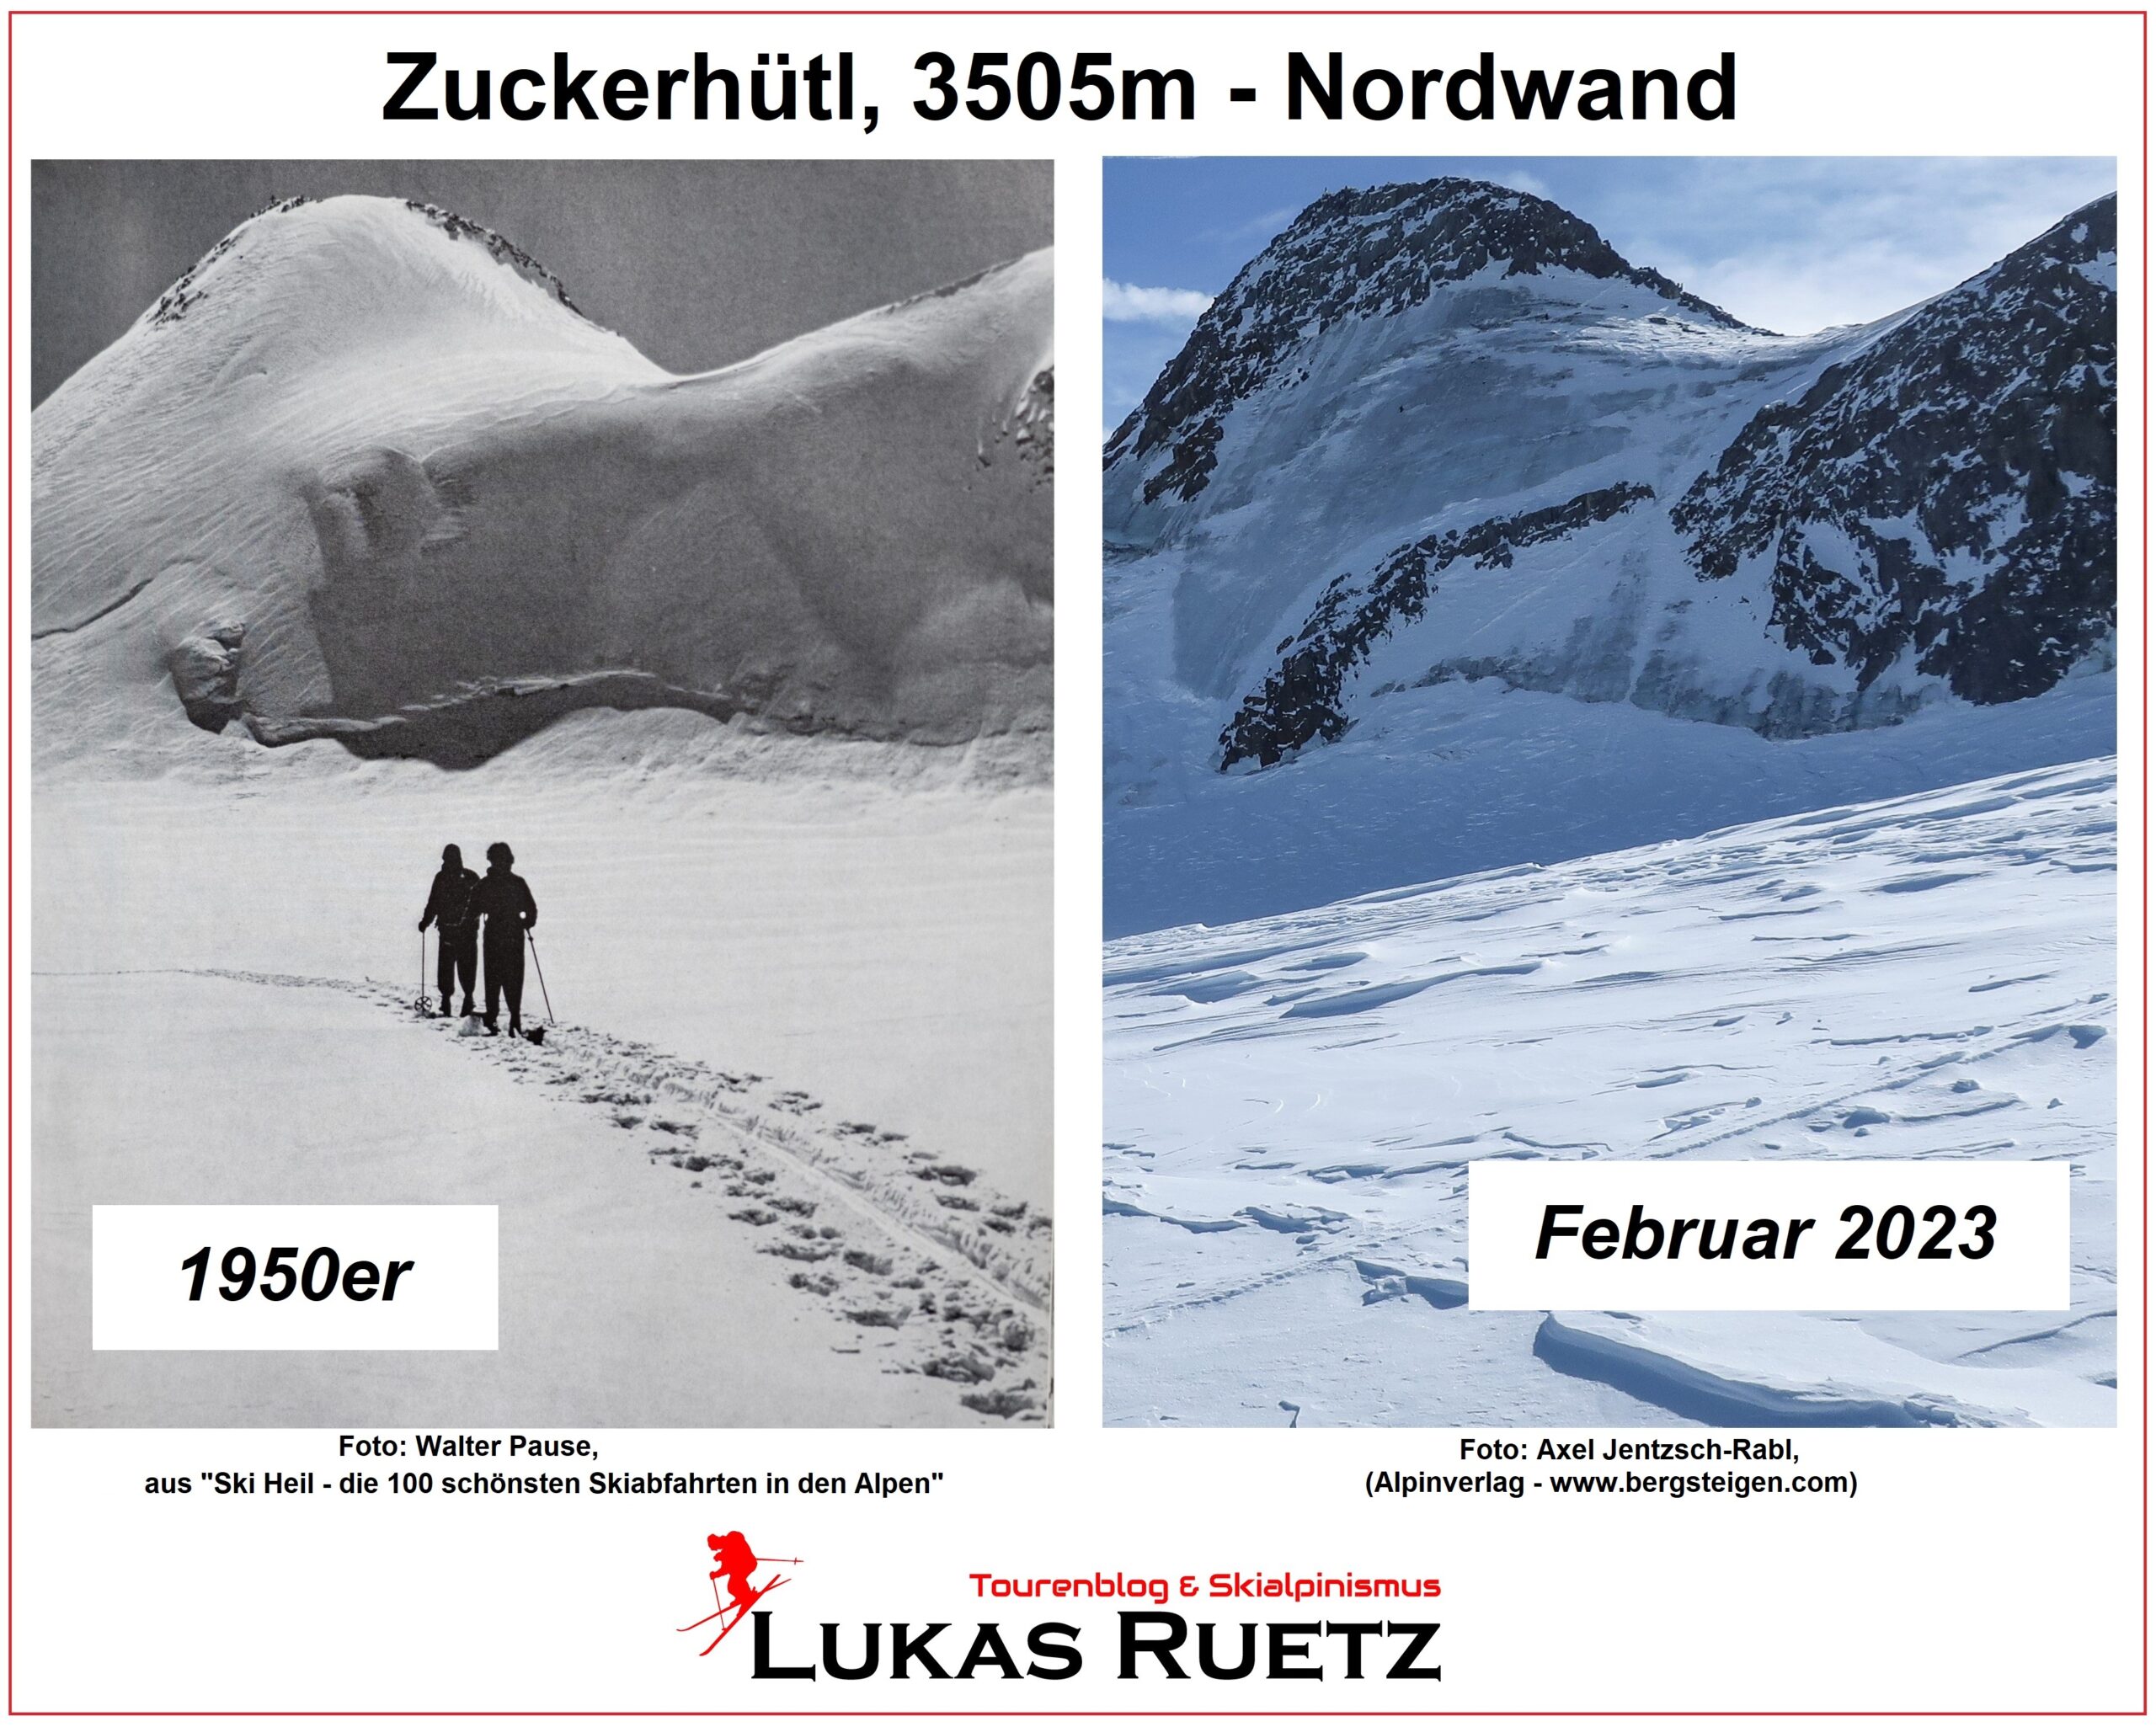 Gletschervergleich Zuckerhütl Nordwand 1950er - 2023